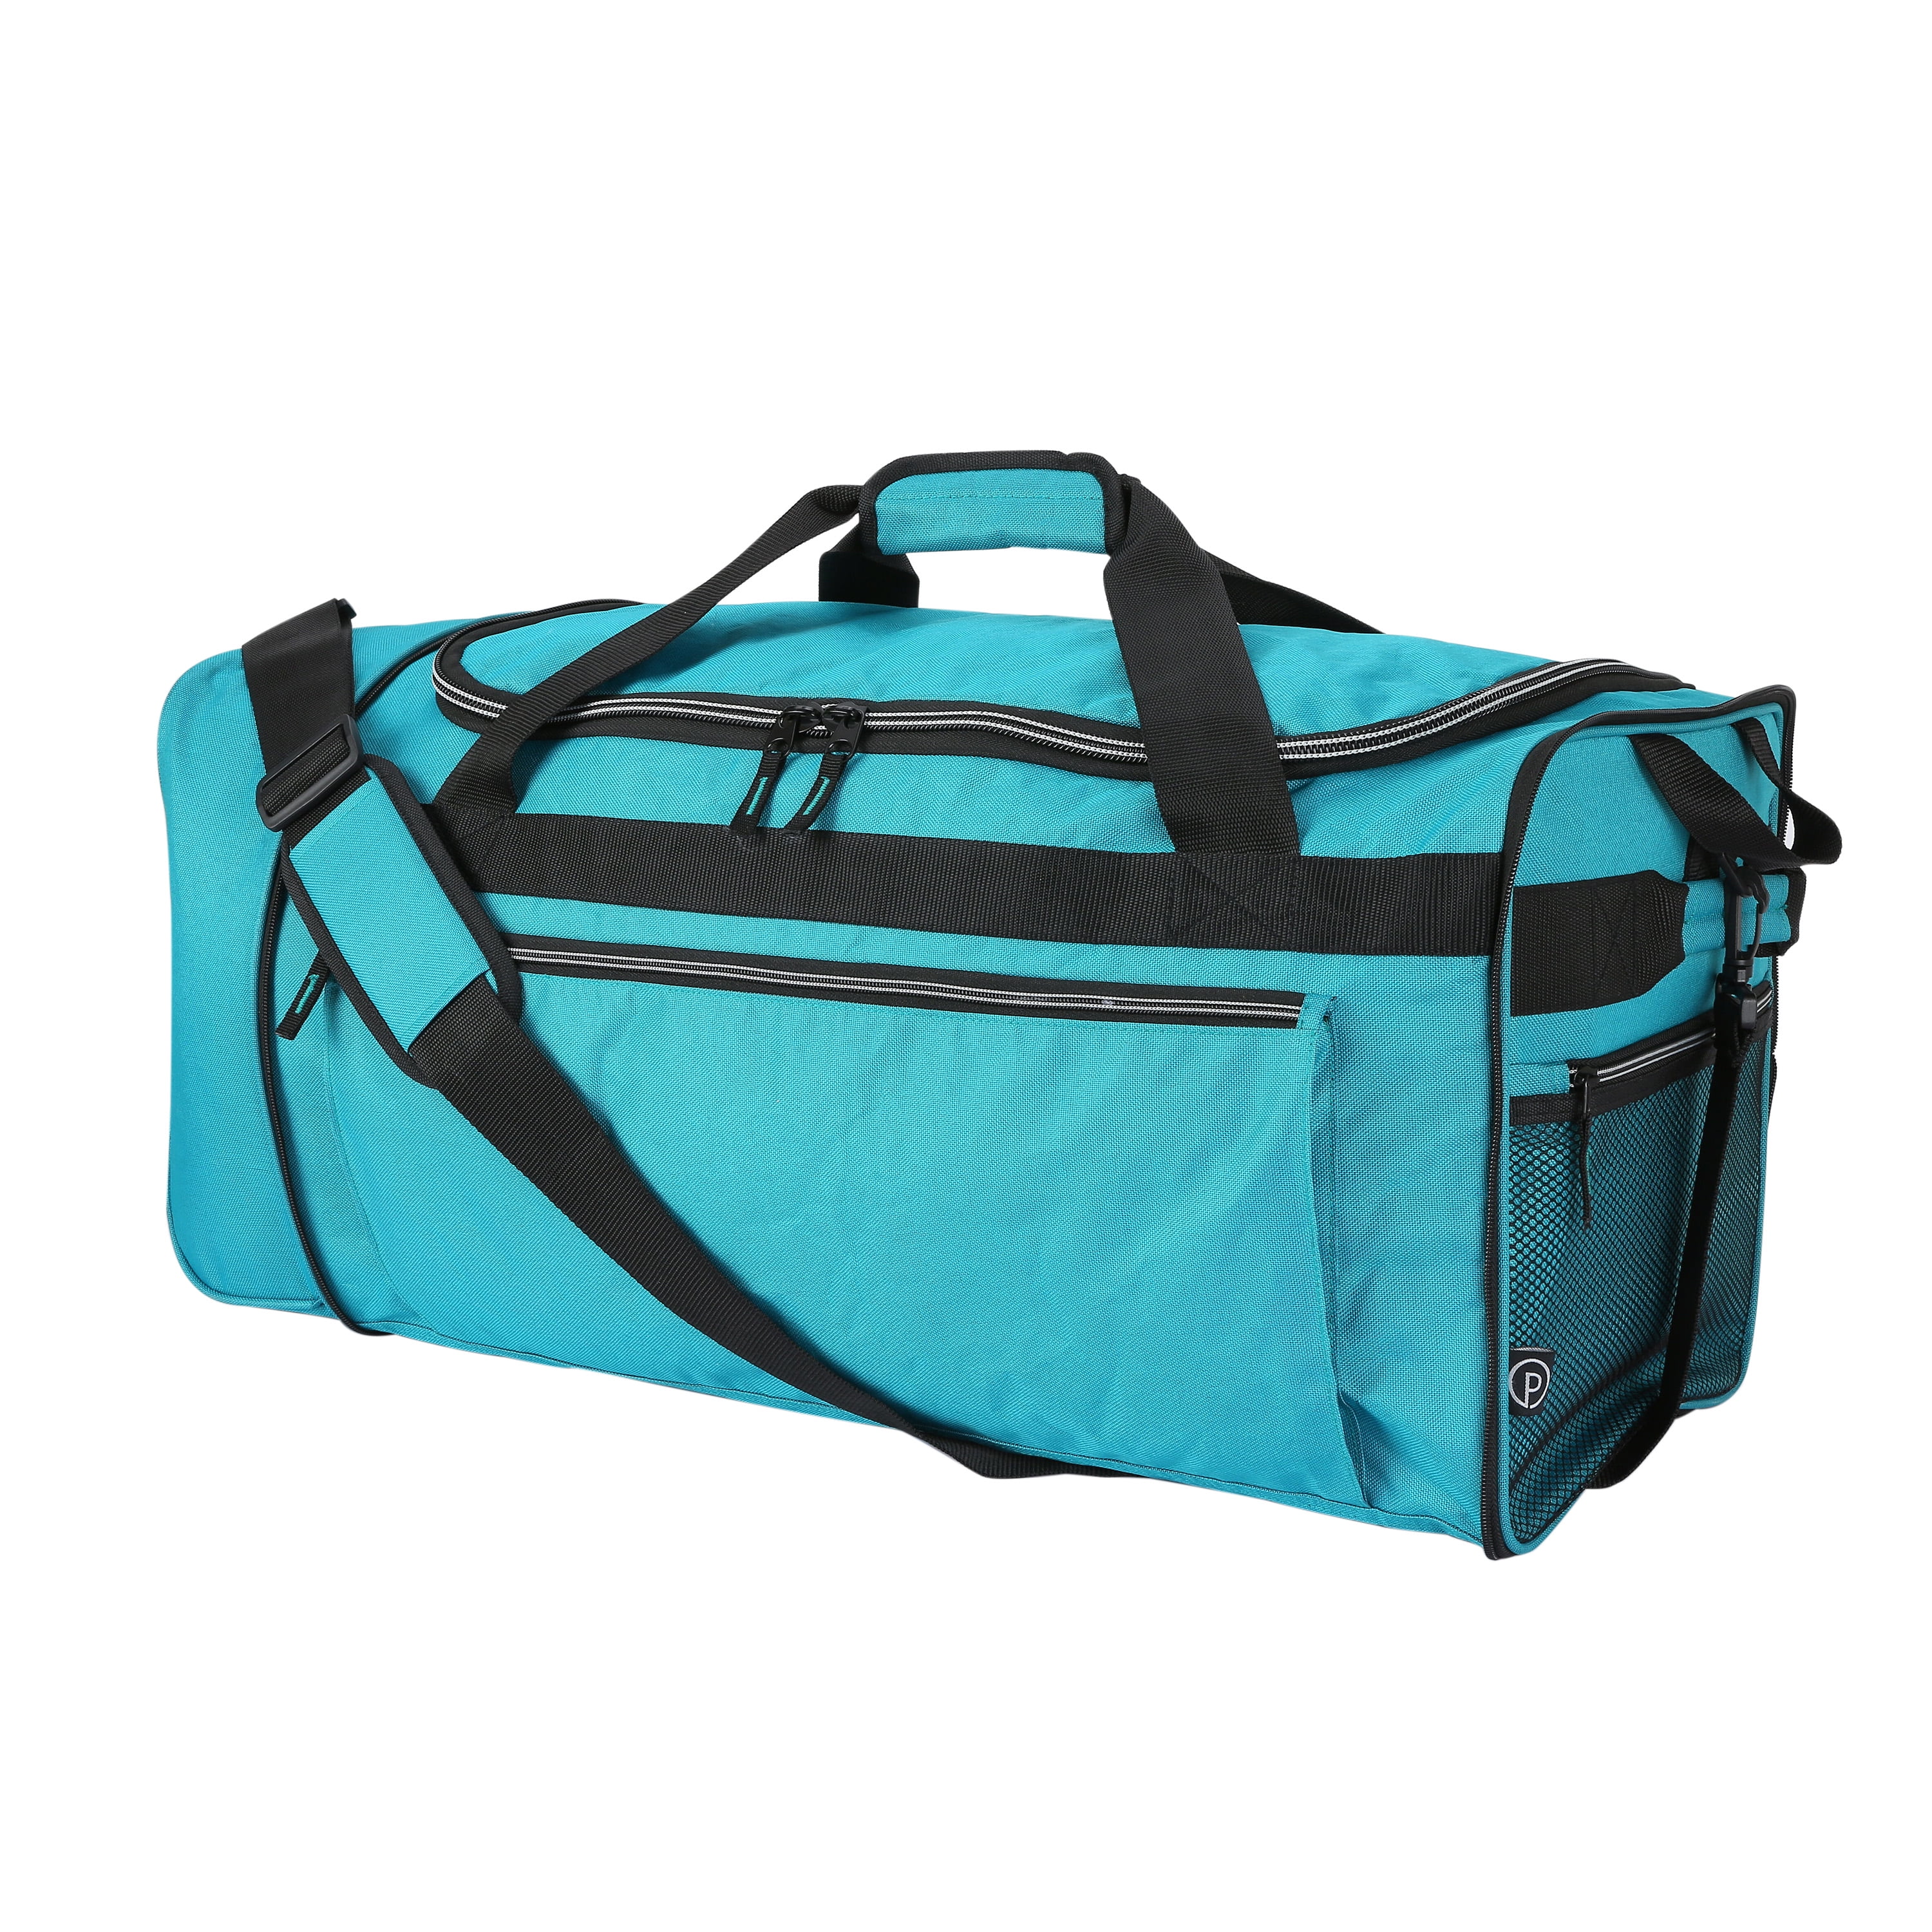 Protege Gray 3pc Travel Luggage Set 24 Check Bag 22 Duffel  Boarding  Tote  Walmartcom